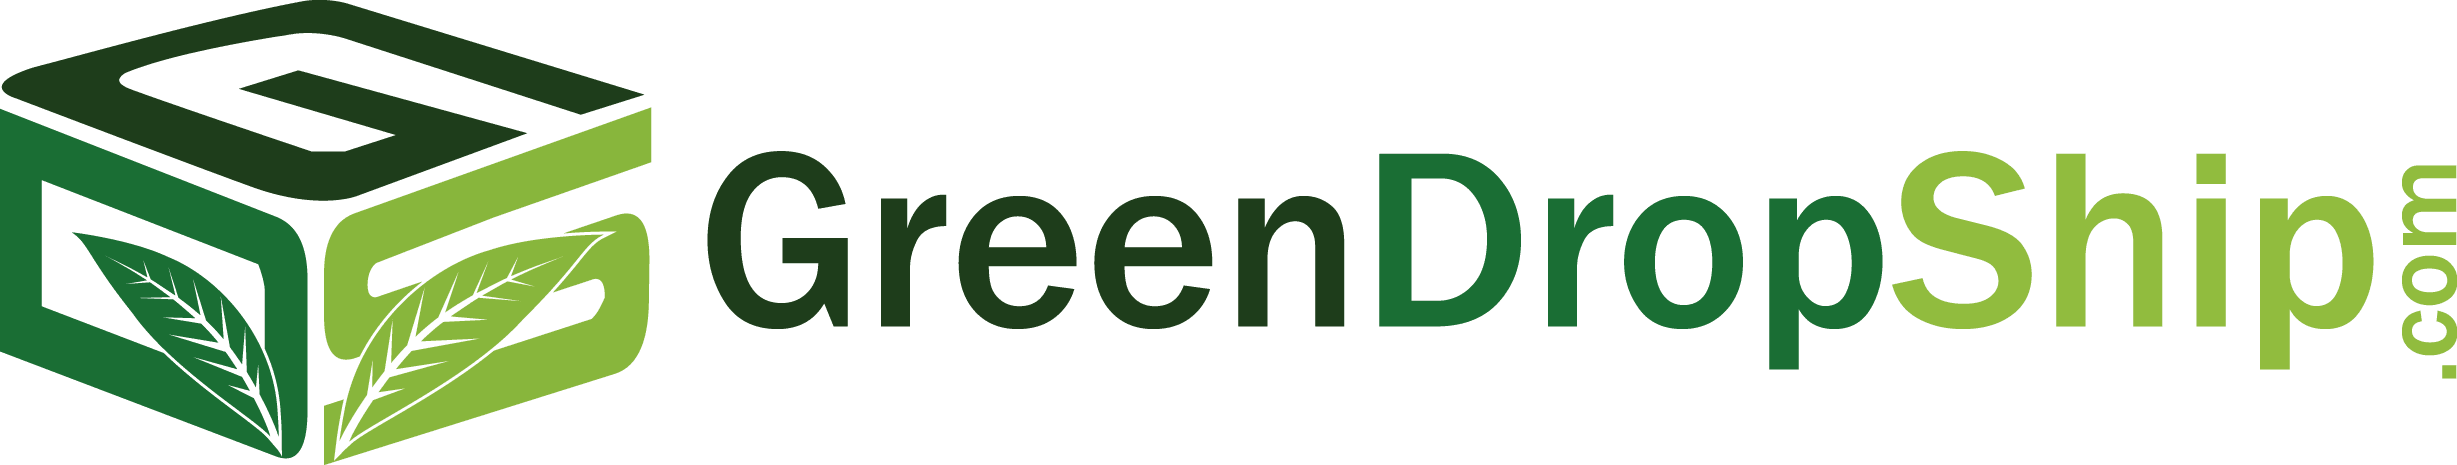 GreenDropShip-icon